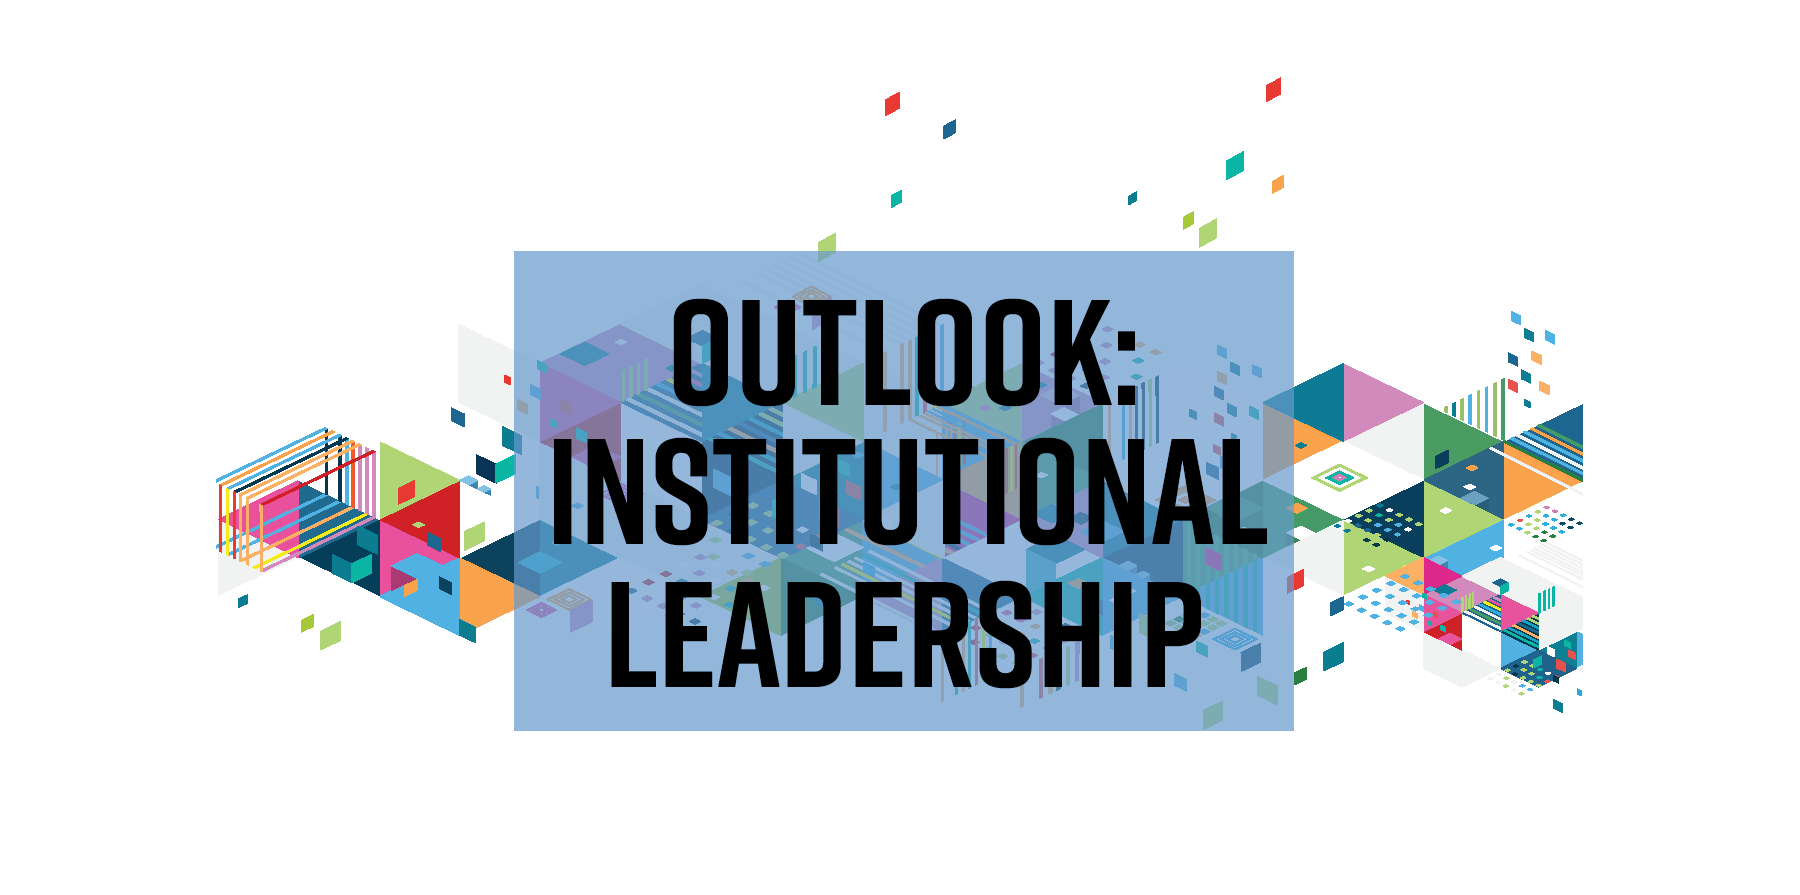 Outlook on institutional leadership in 2019